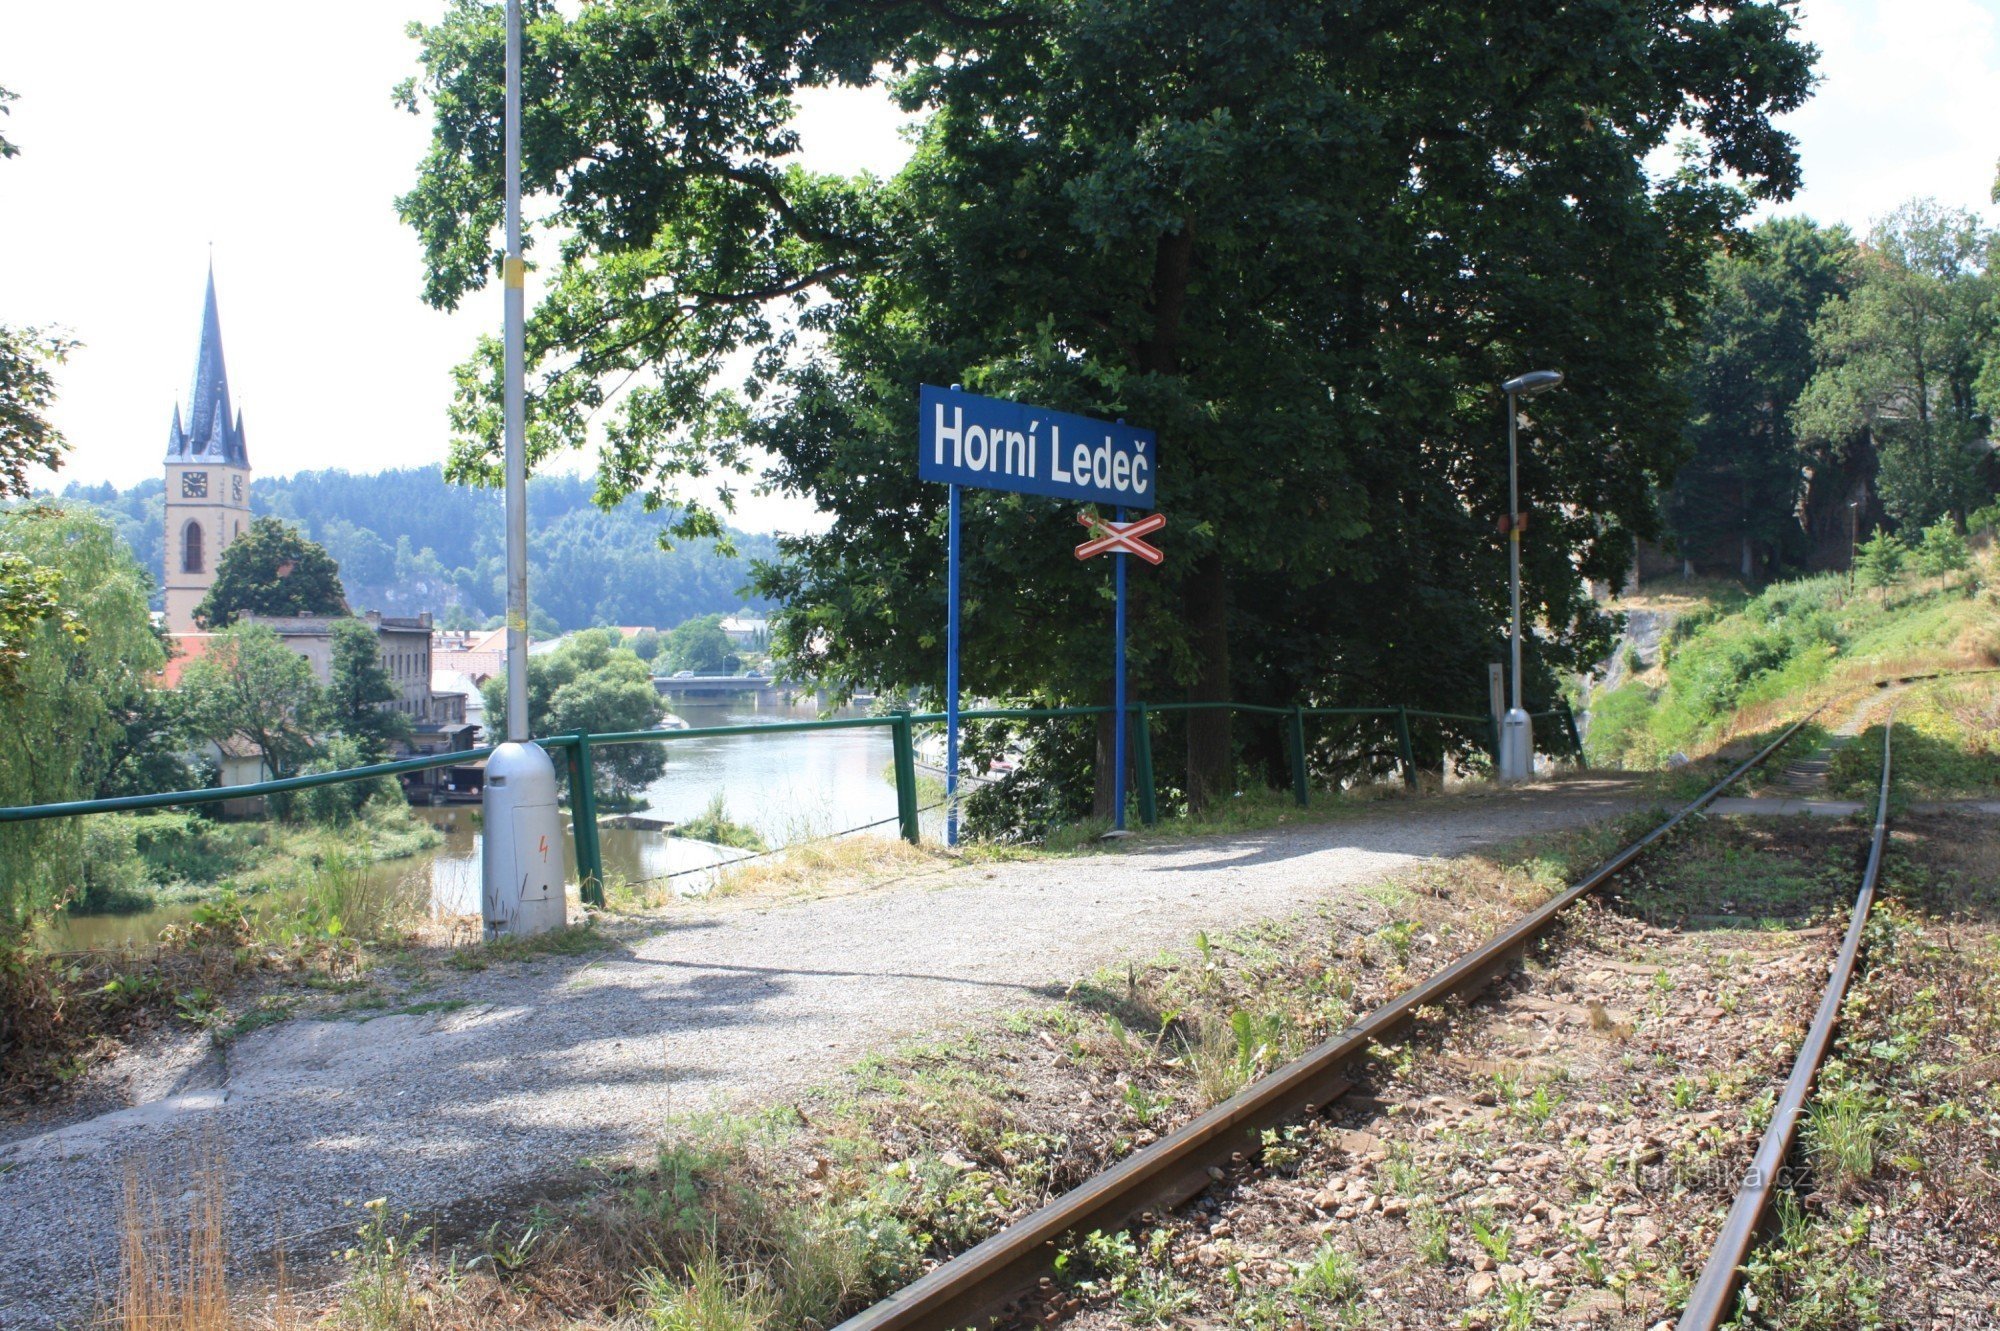 霍尼莱德奇 - 火车站